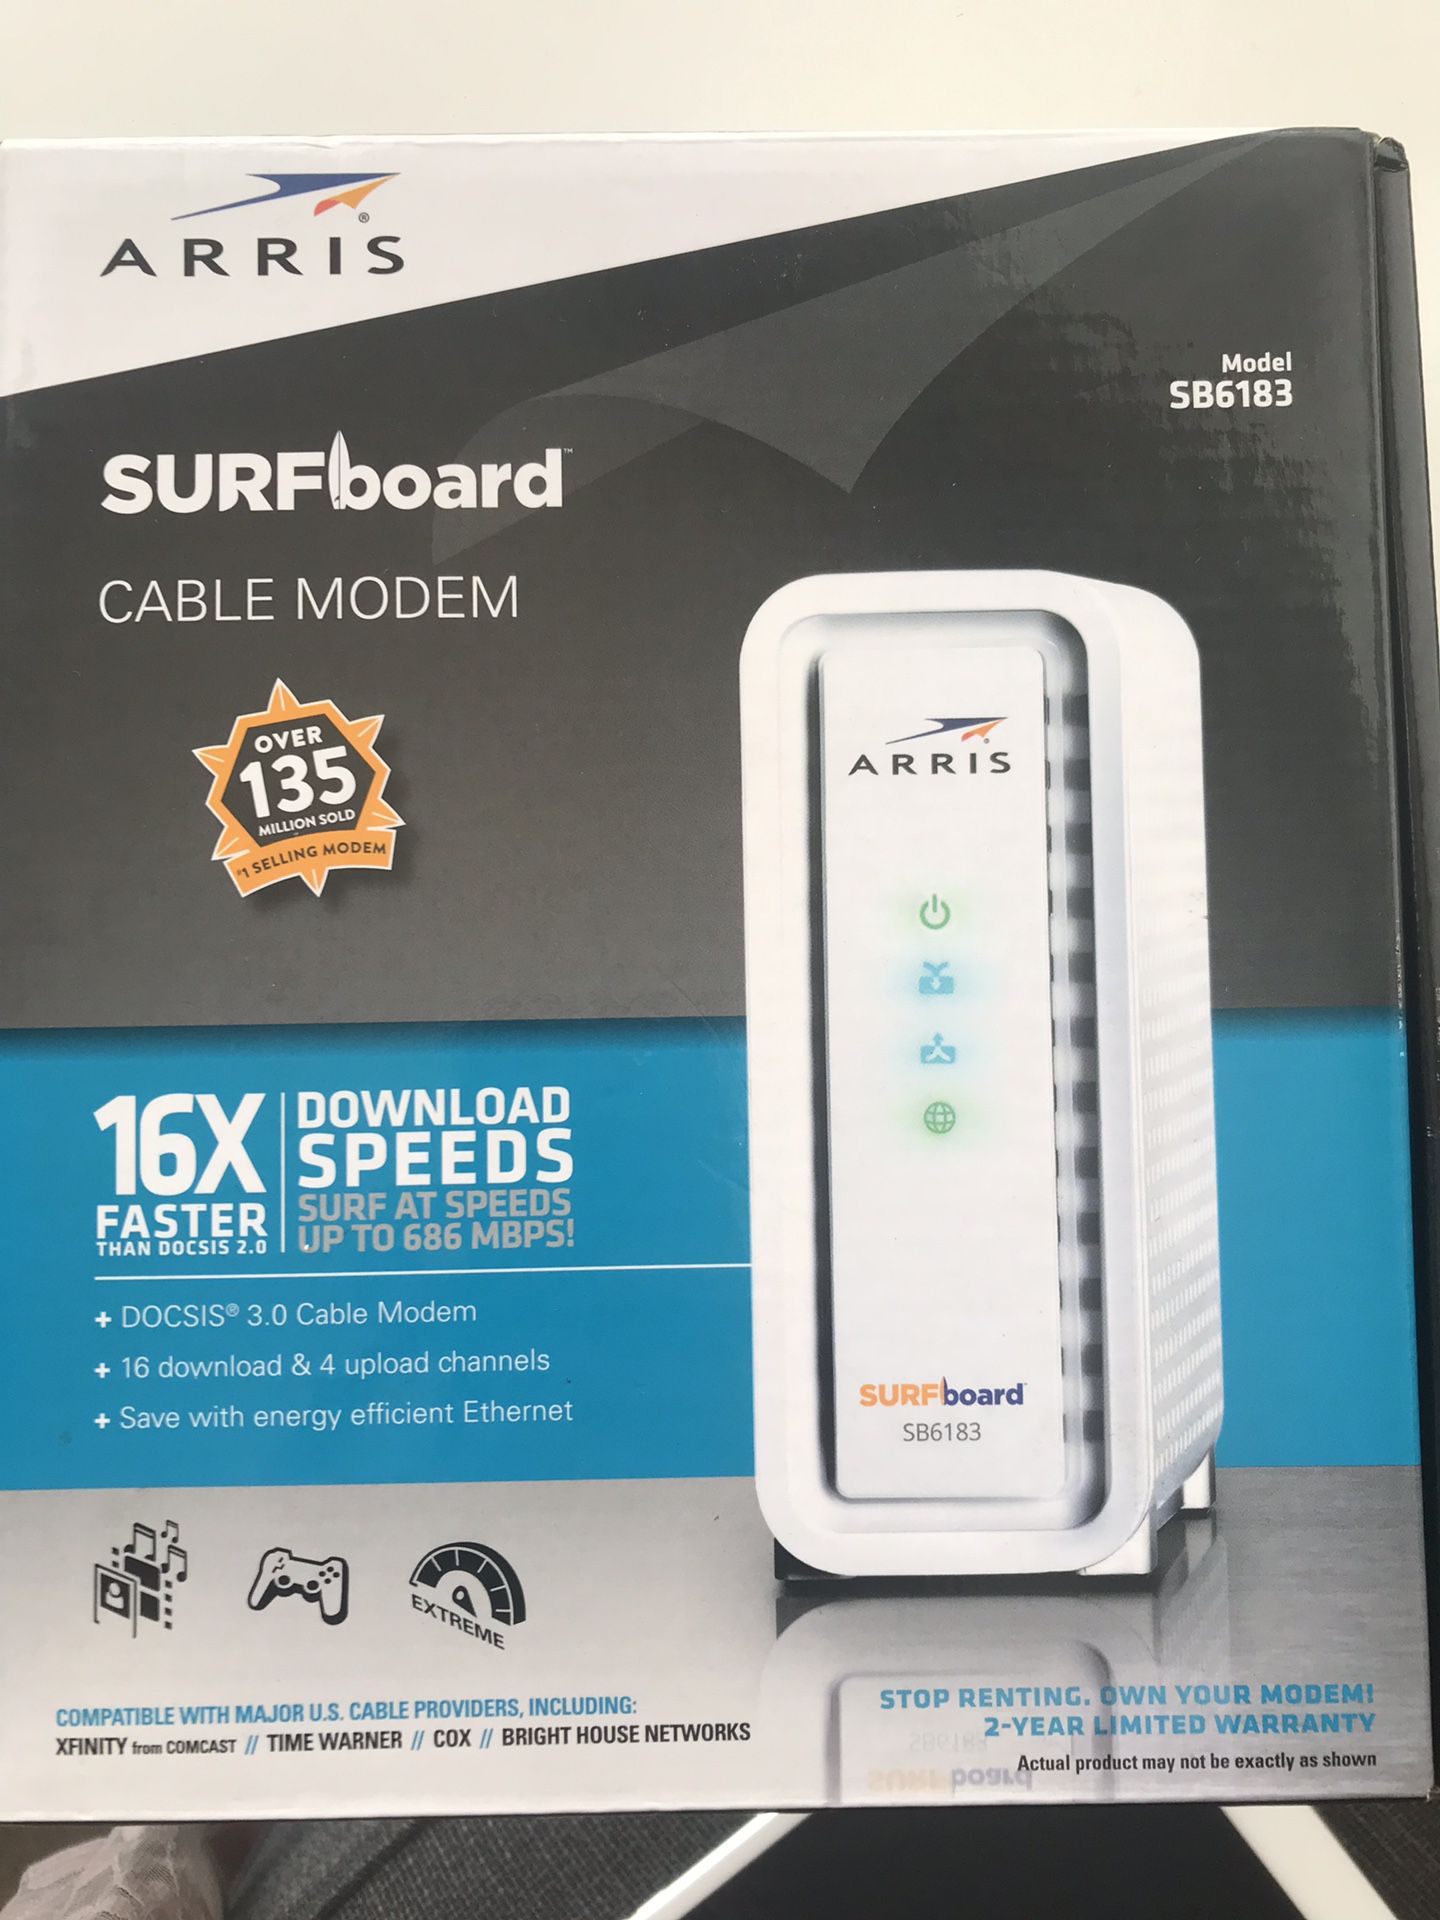 Arris surfboard cable modem